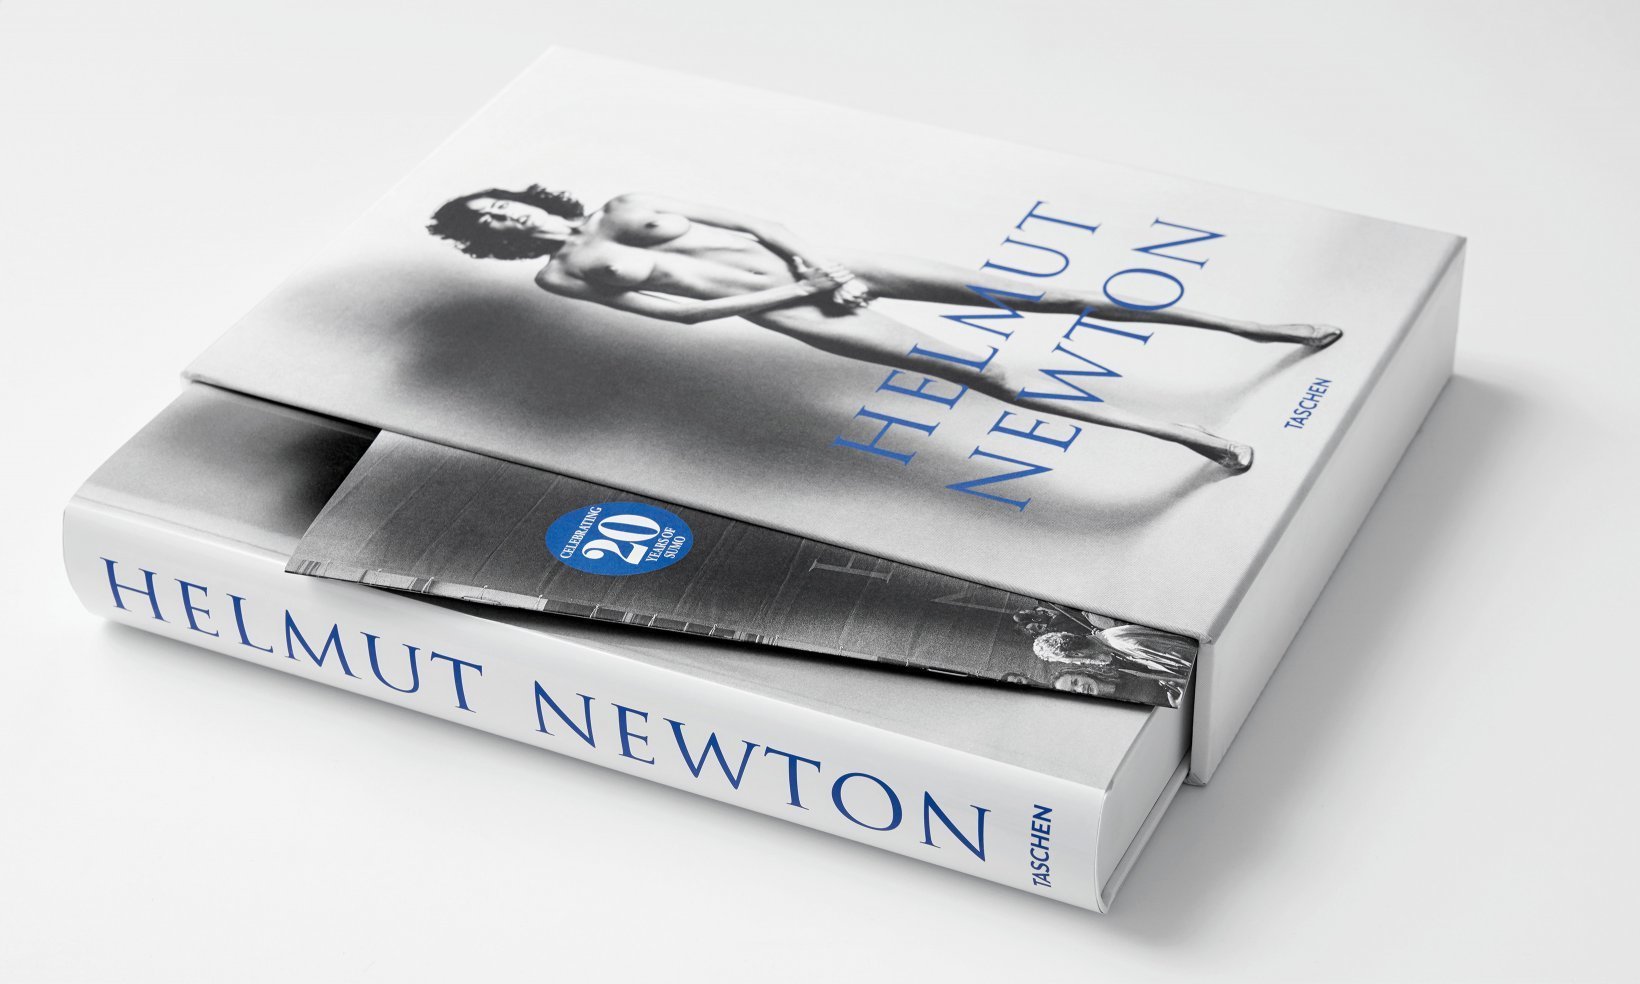 By June Newton from Helmut Newton. SUMO. 20th Anniversary copyright Taschen 2019 